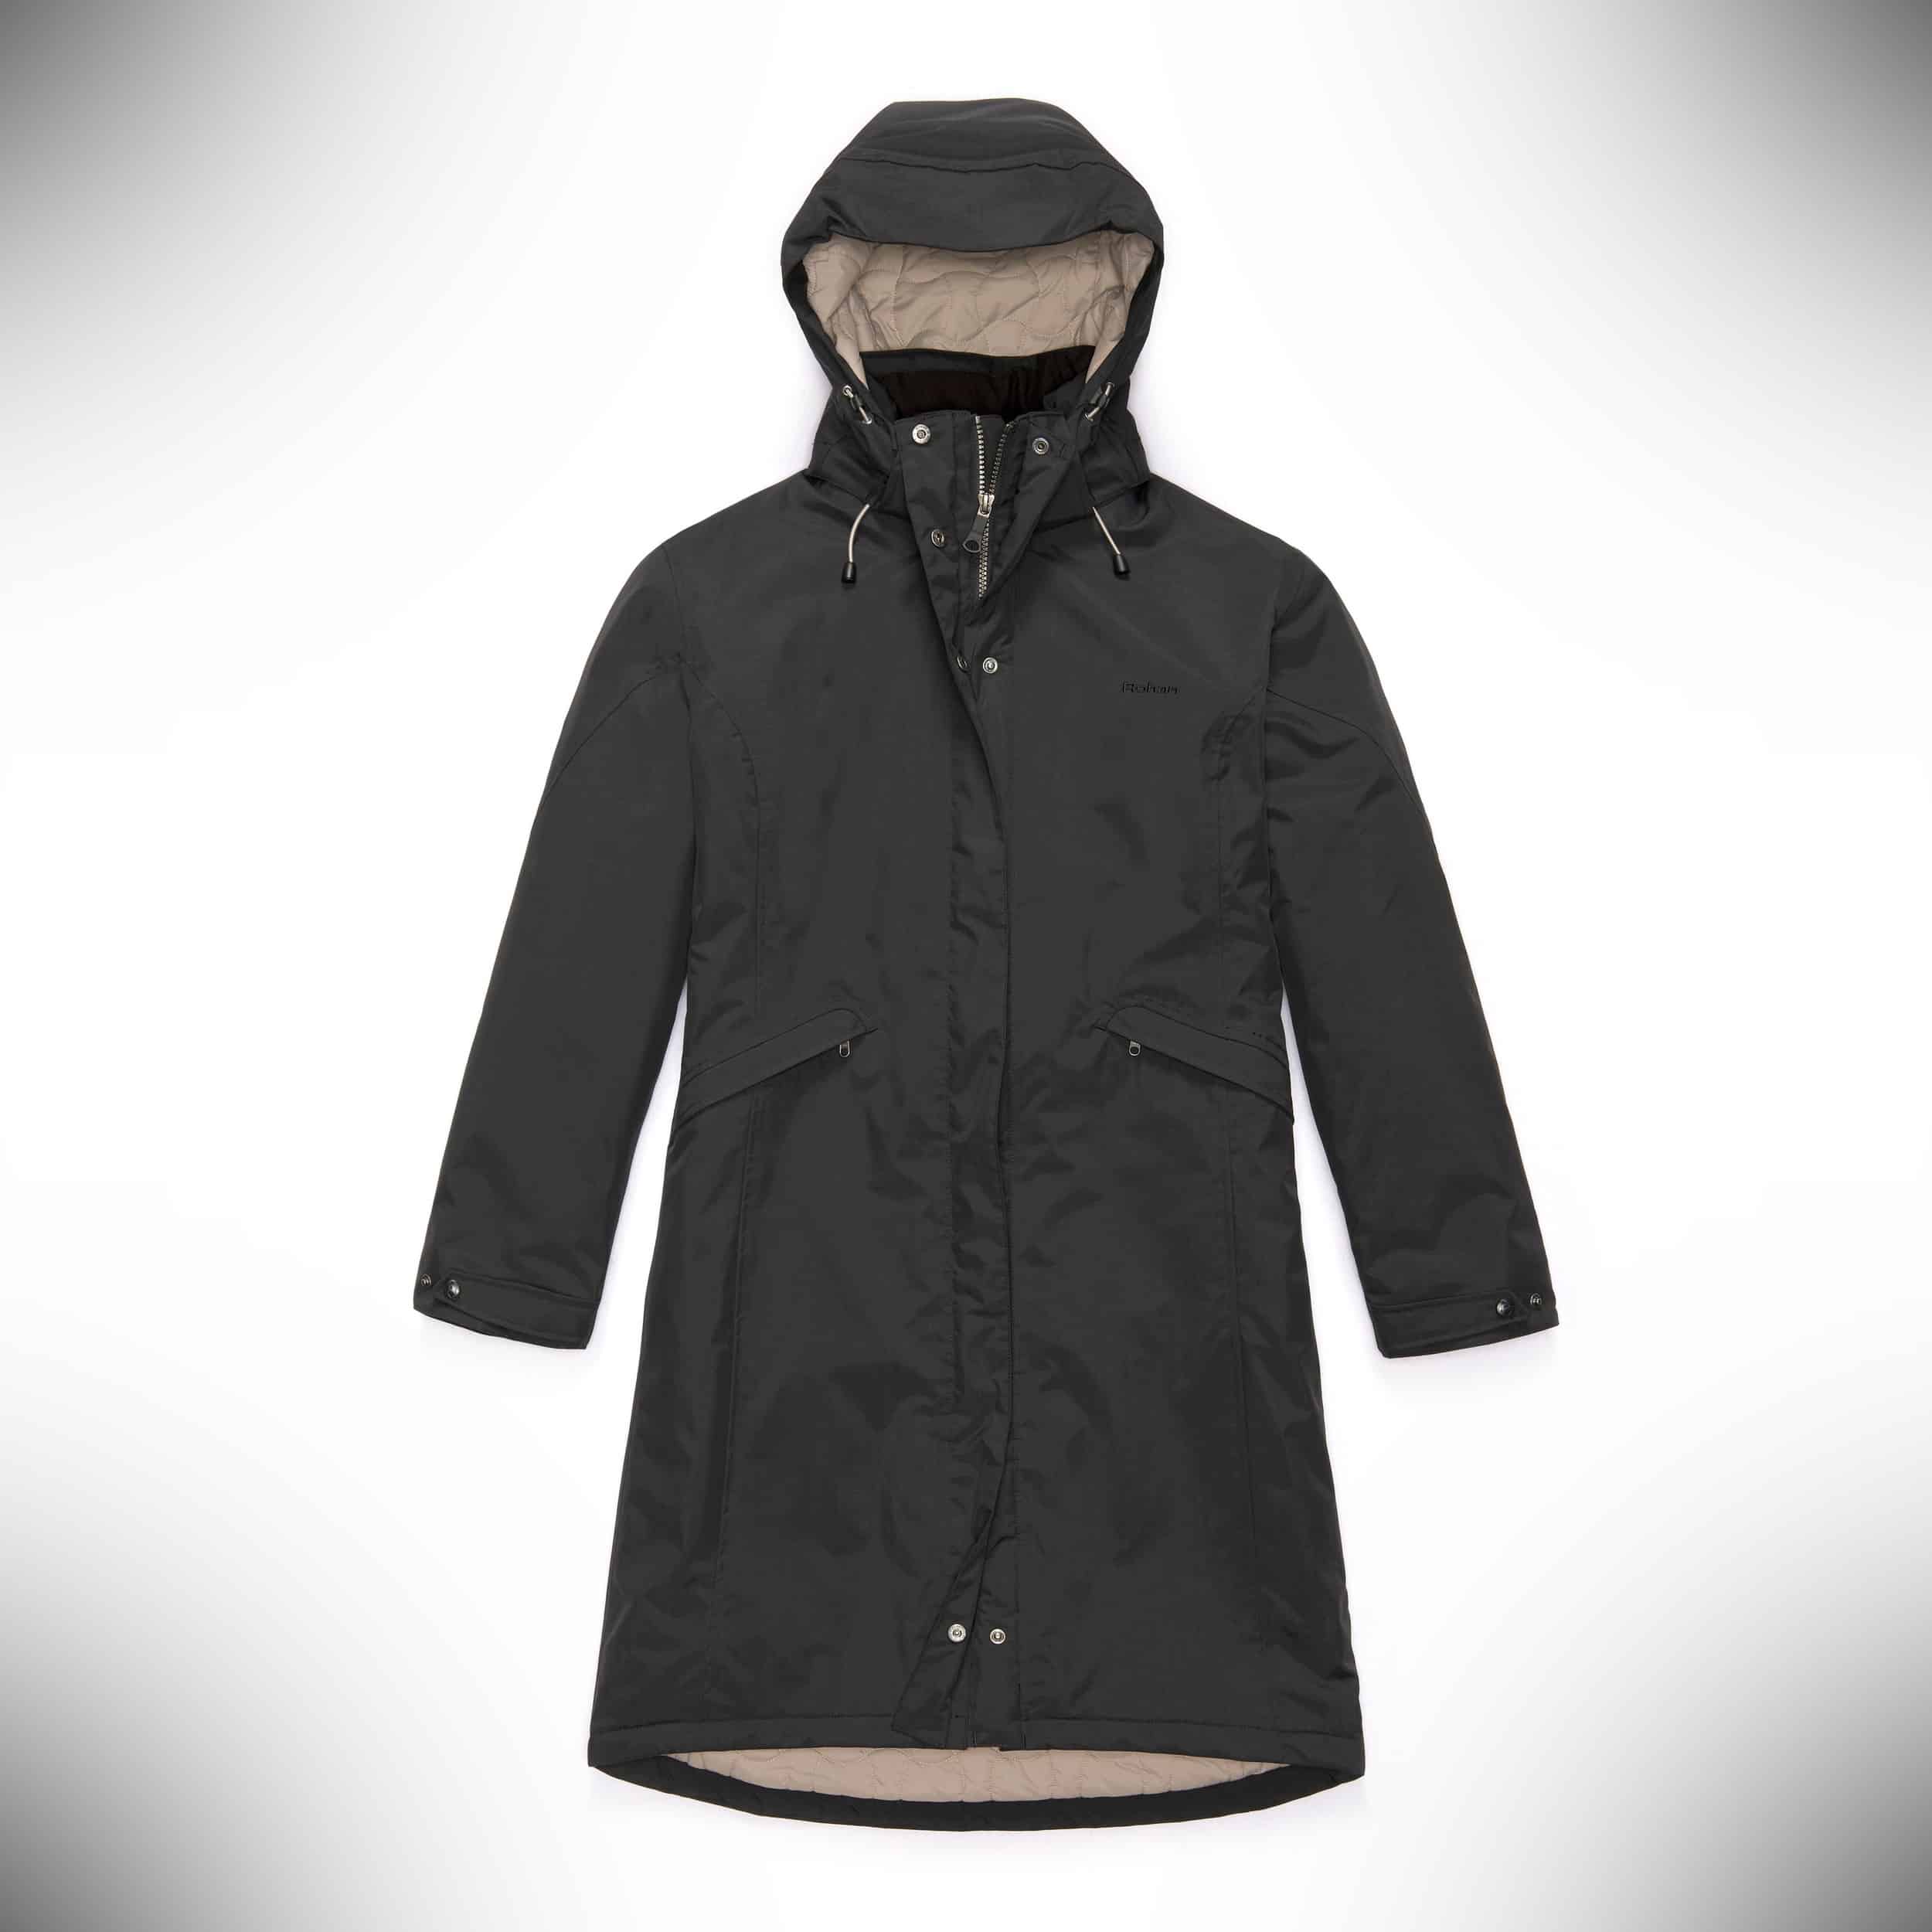 Rohan Northshore Coat - raincoat